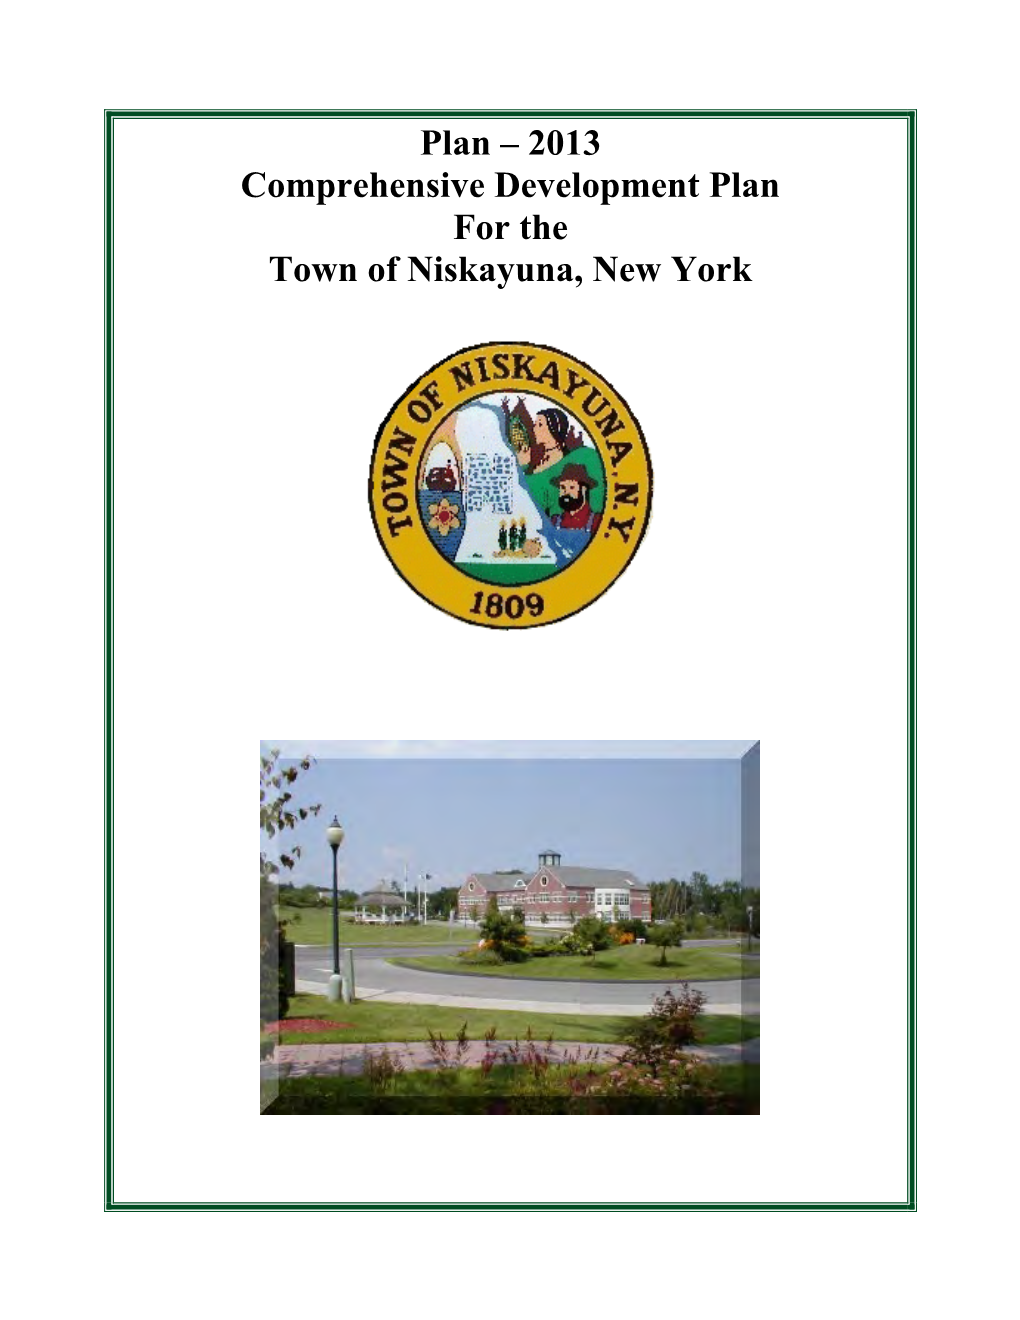 2013 Comprehensive Development Plan for the Town of Niskayuna, New York